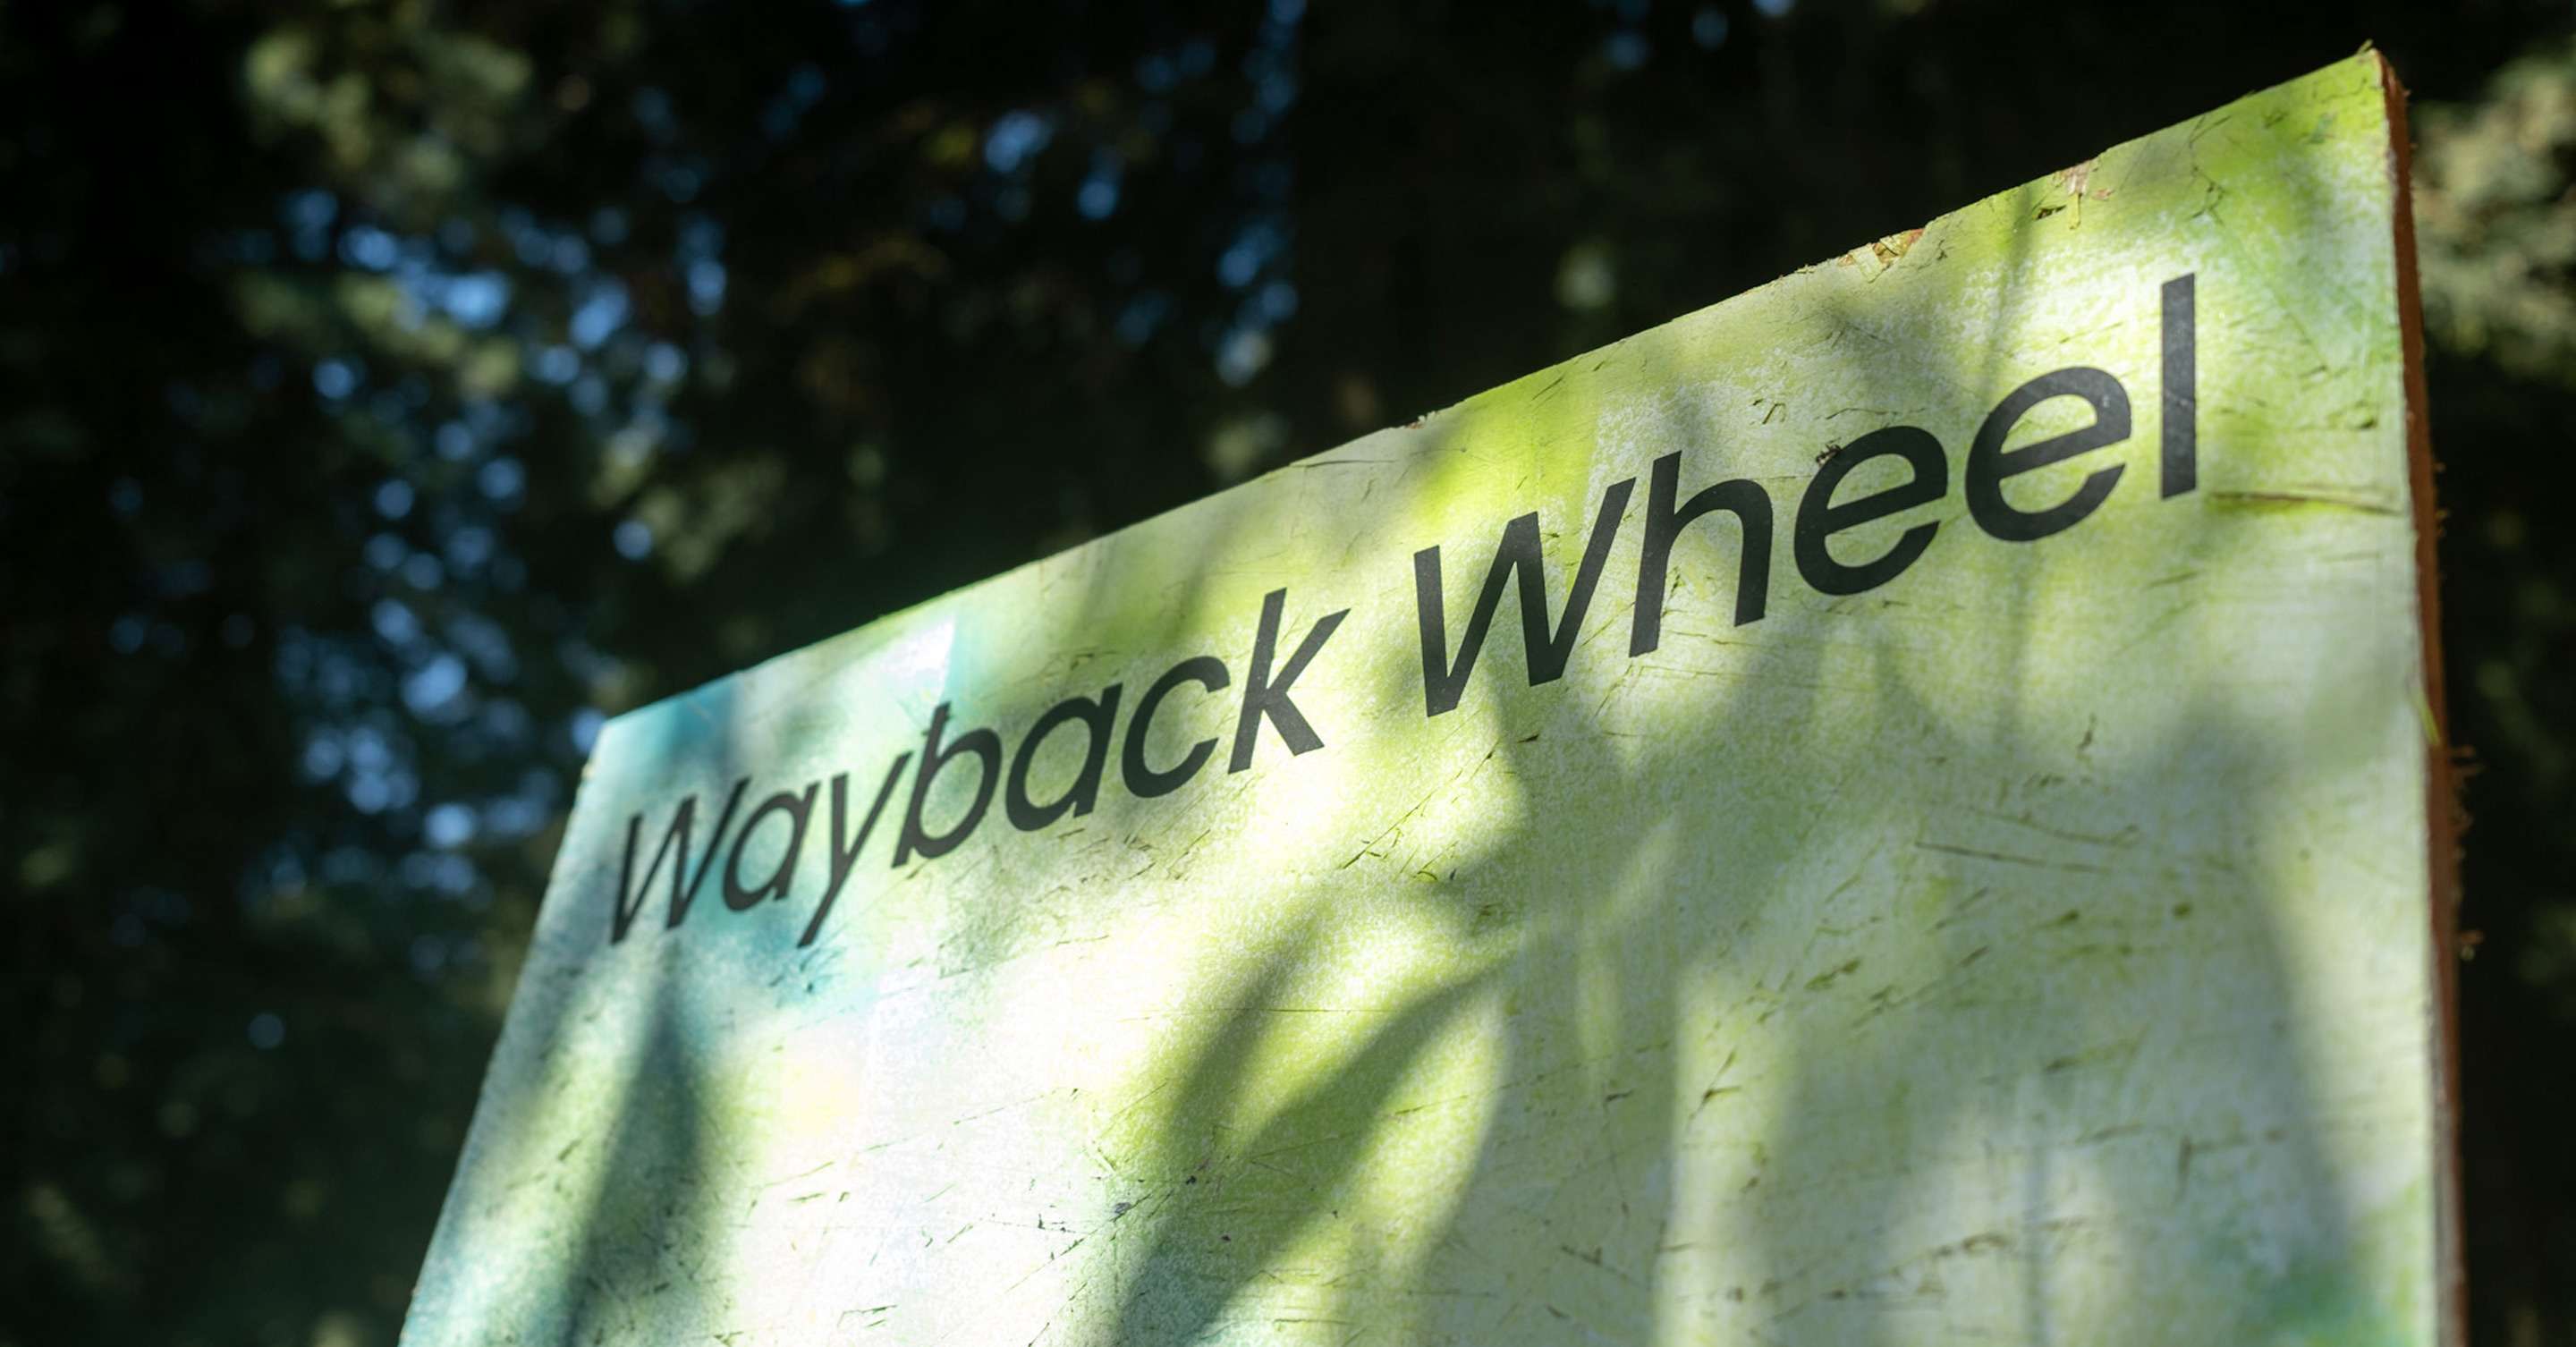 whayback-wheel-DWebCamp2022-ID-nezhynska3